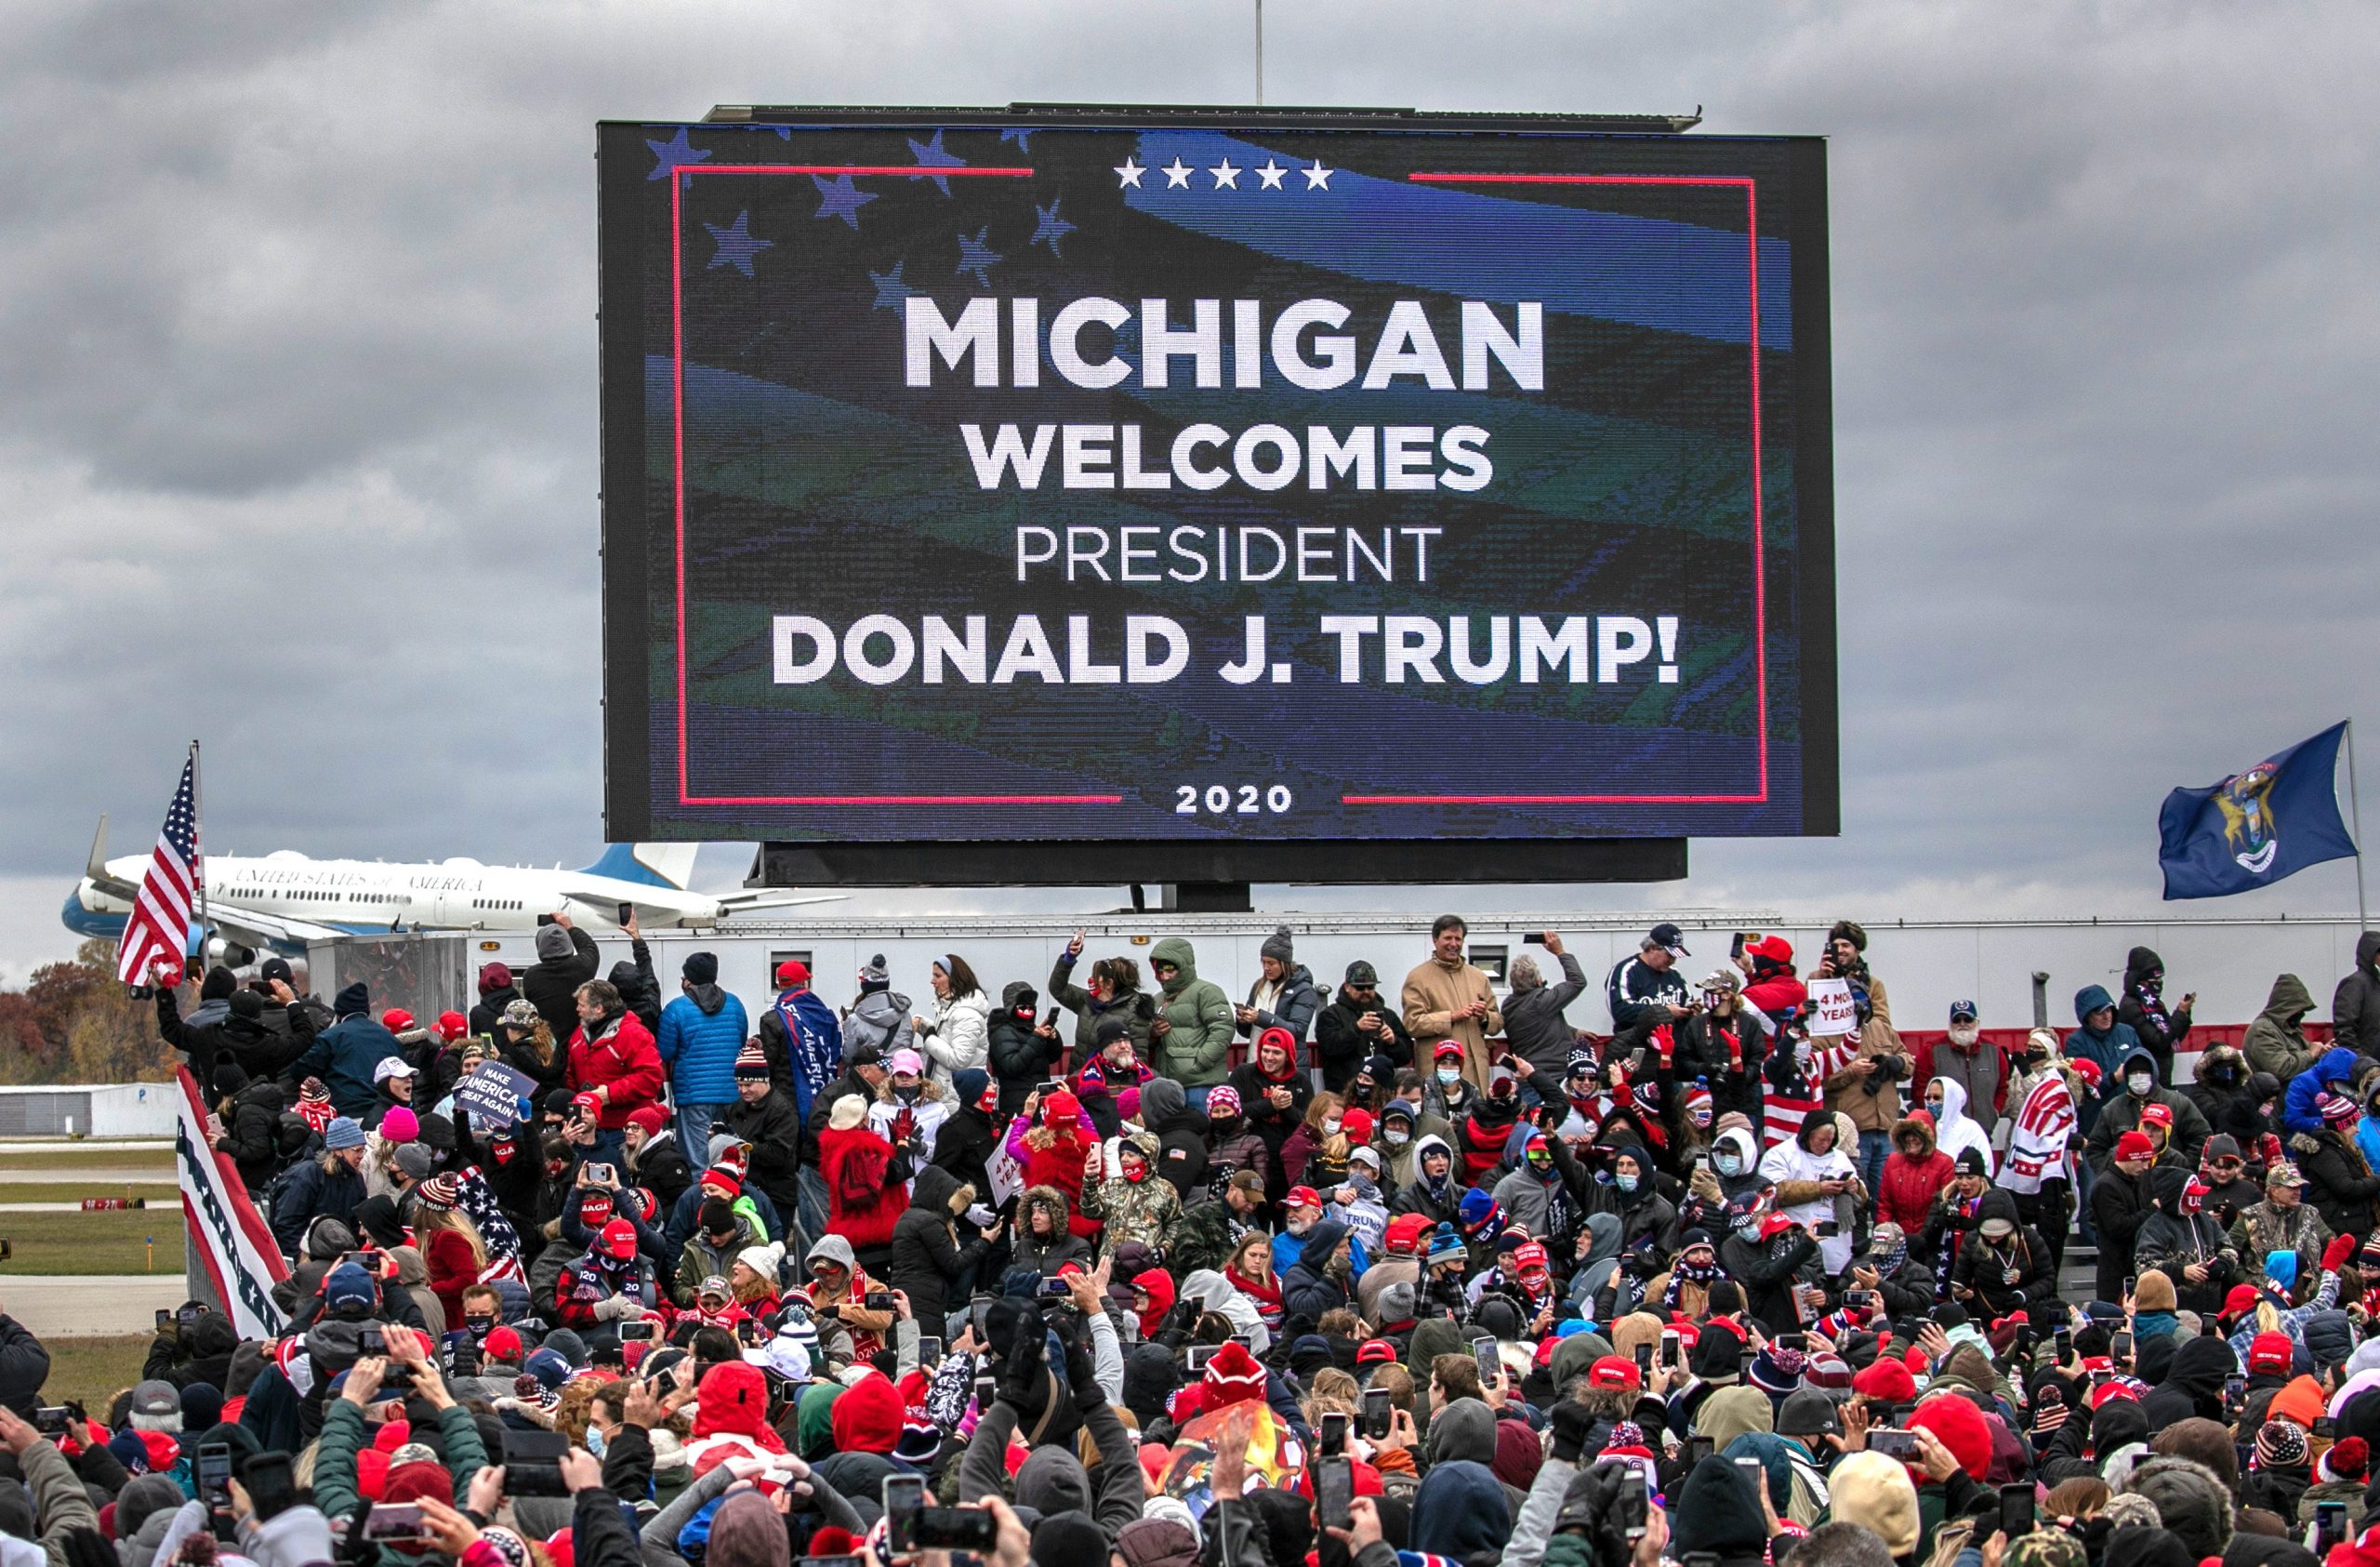 Trump rally sign in Michigan